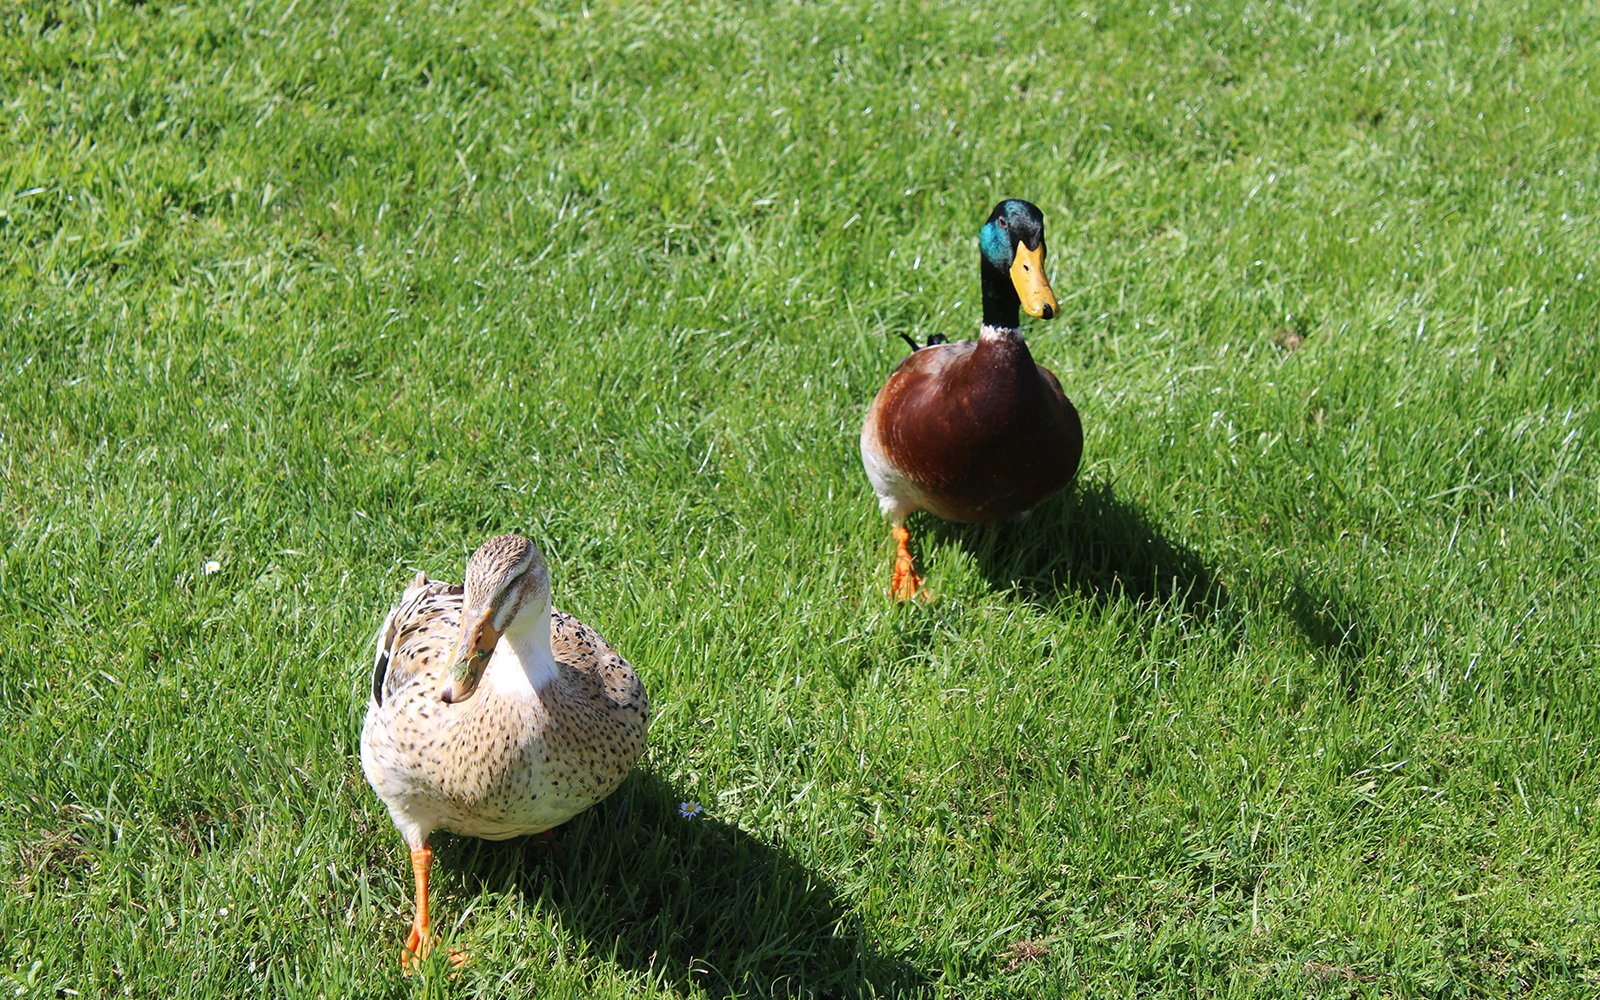 2 close-up ducks walking on grass